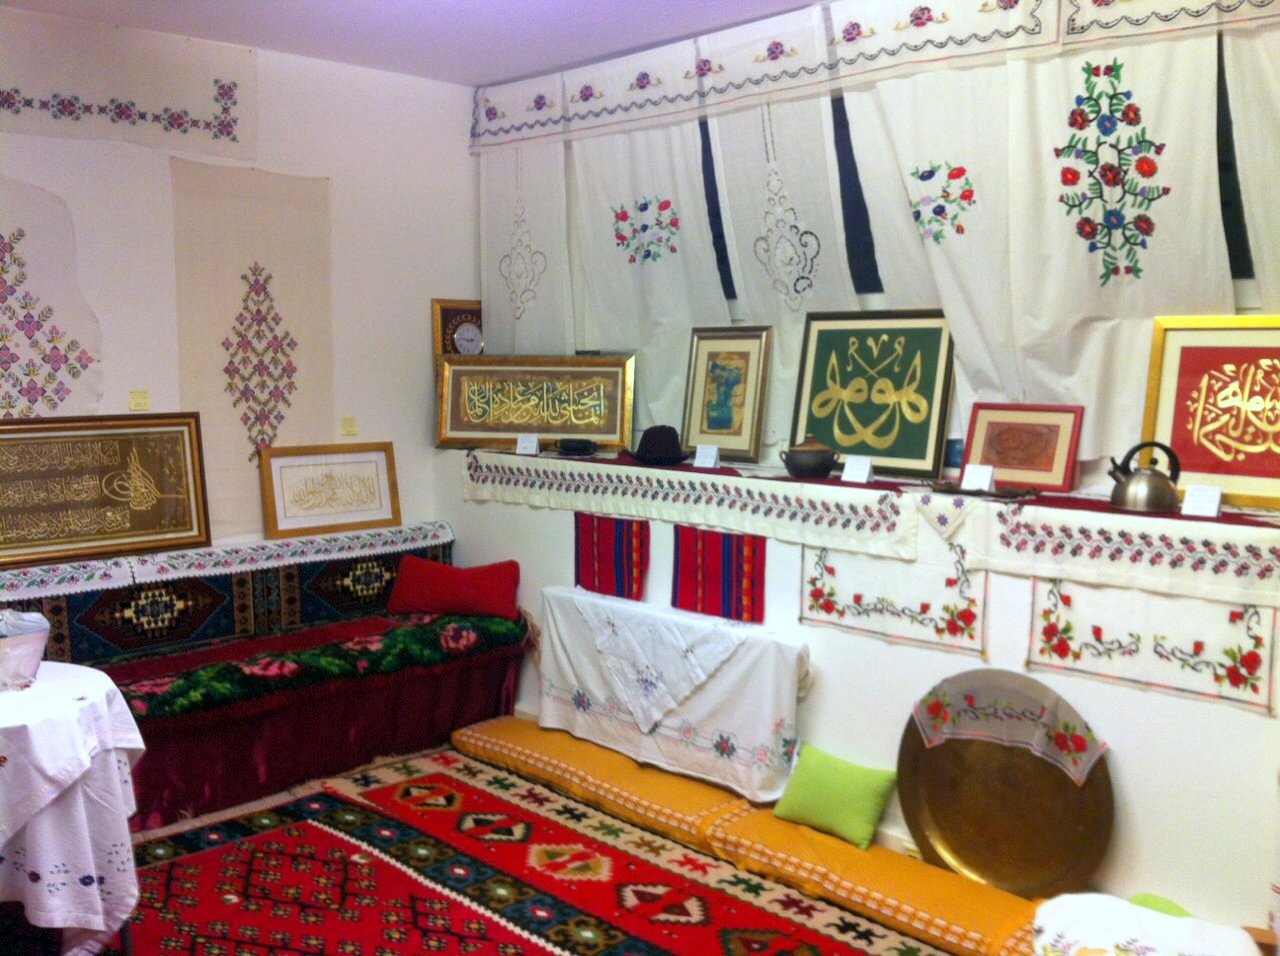 radovi-izlozeni-u-bosanskoj-sobi-privukli-ljubitelje-islamske-kaligrafije-2